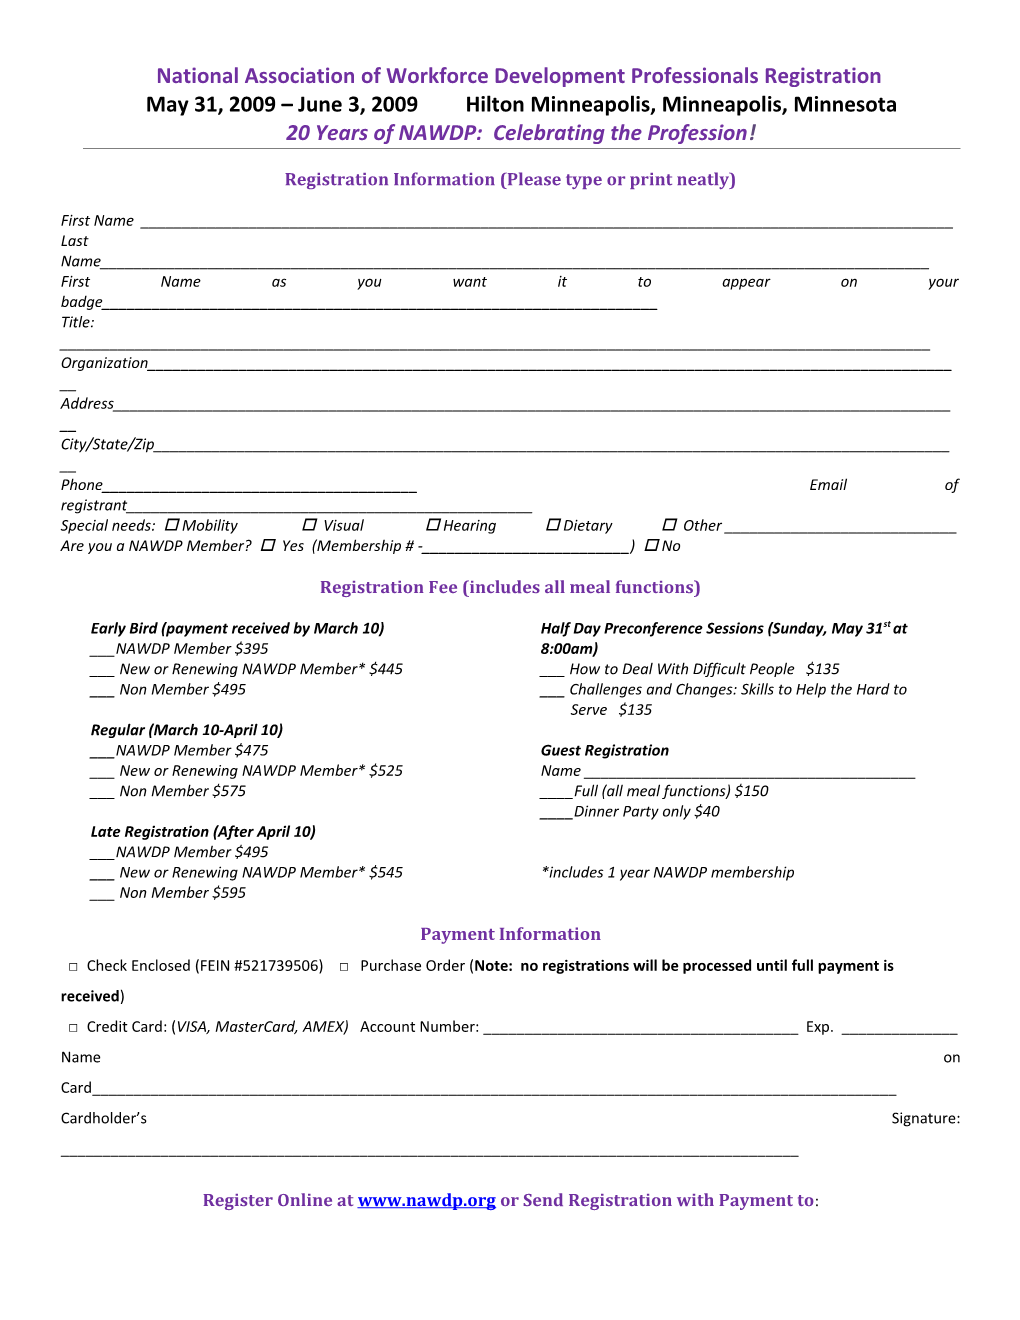 NAWDP 2002 Annual Conference Presenter Registration Form